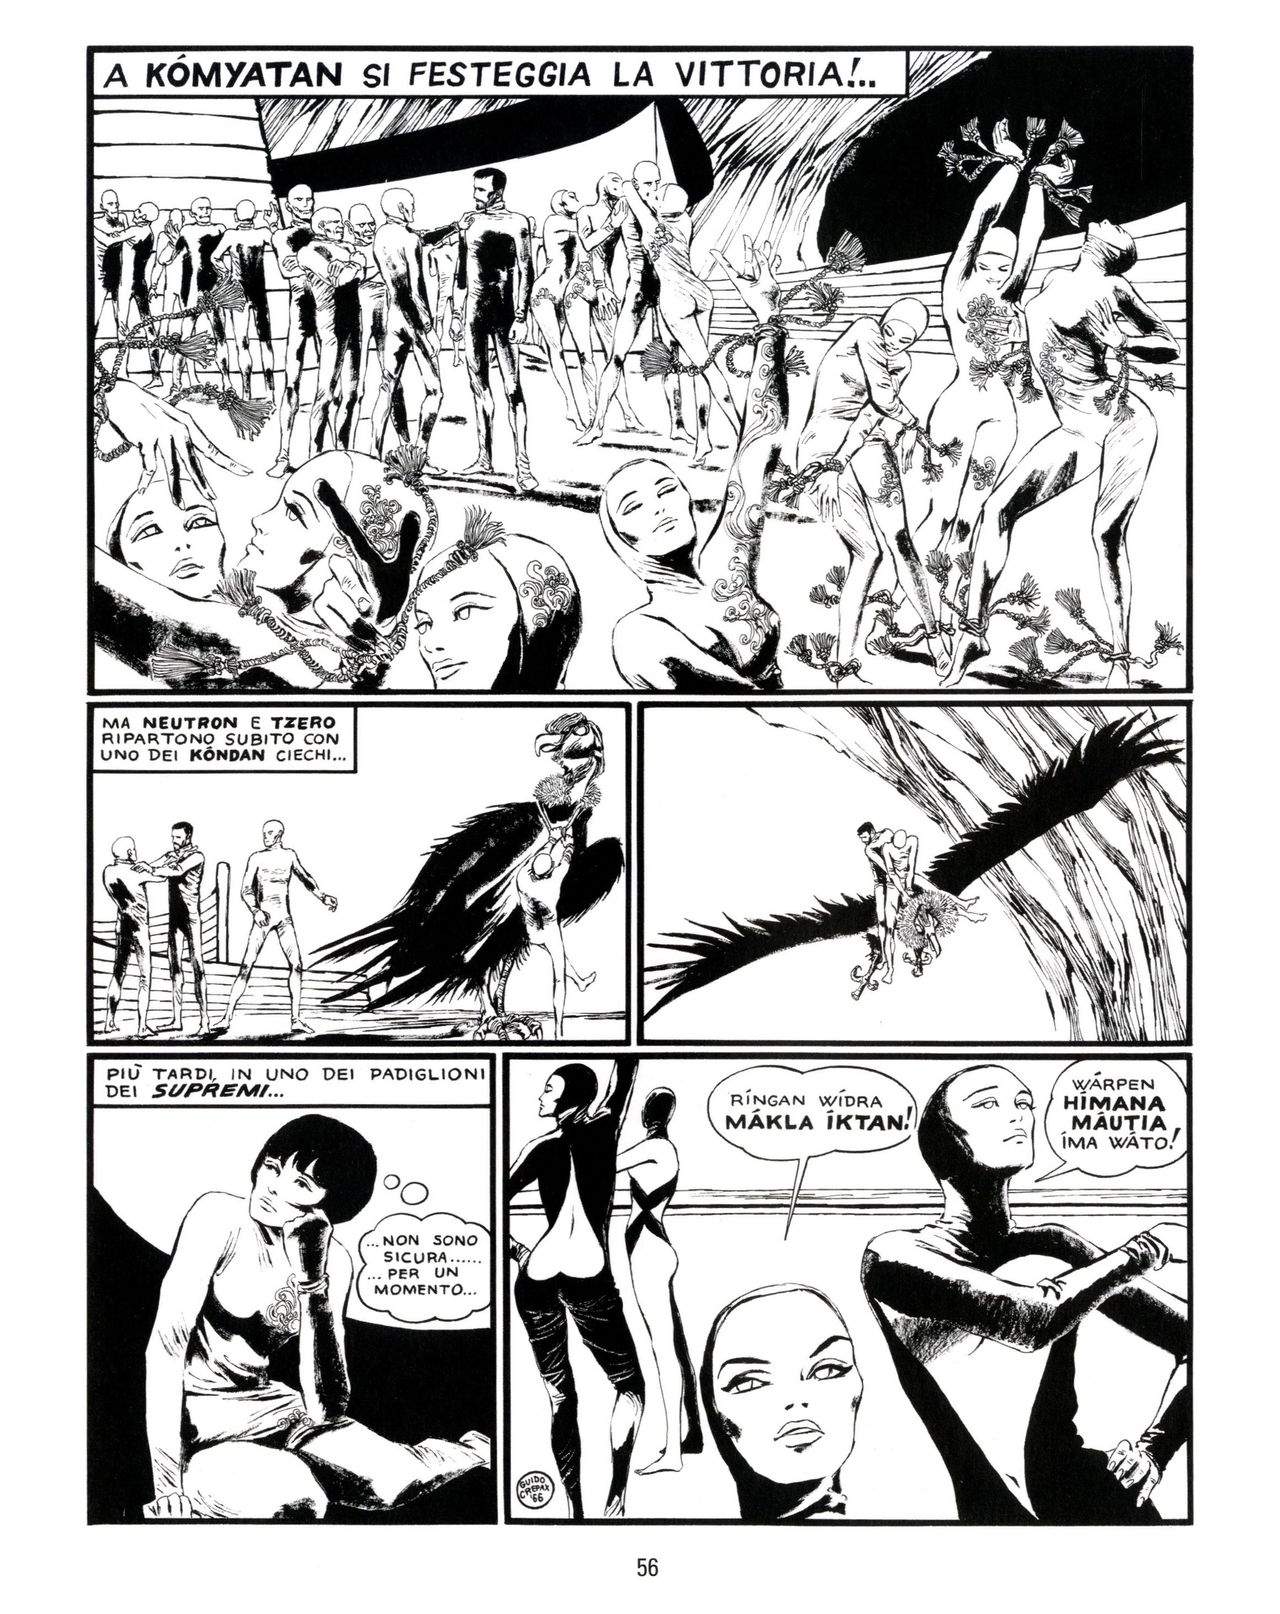 [Guido Crepax] Erotica Fumetti #25 : L'ascesa dei sotterranei : I cavalieri ciechi [Italian] 57